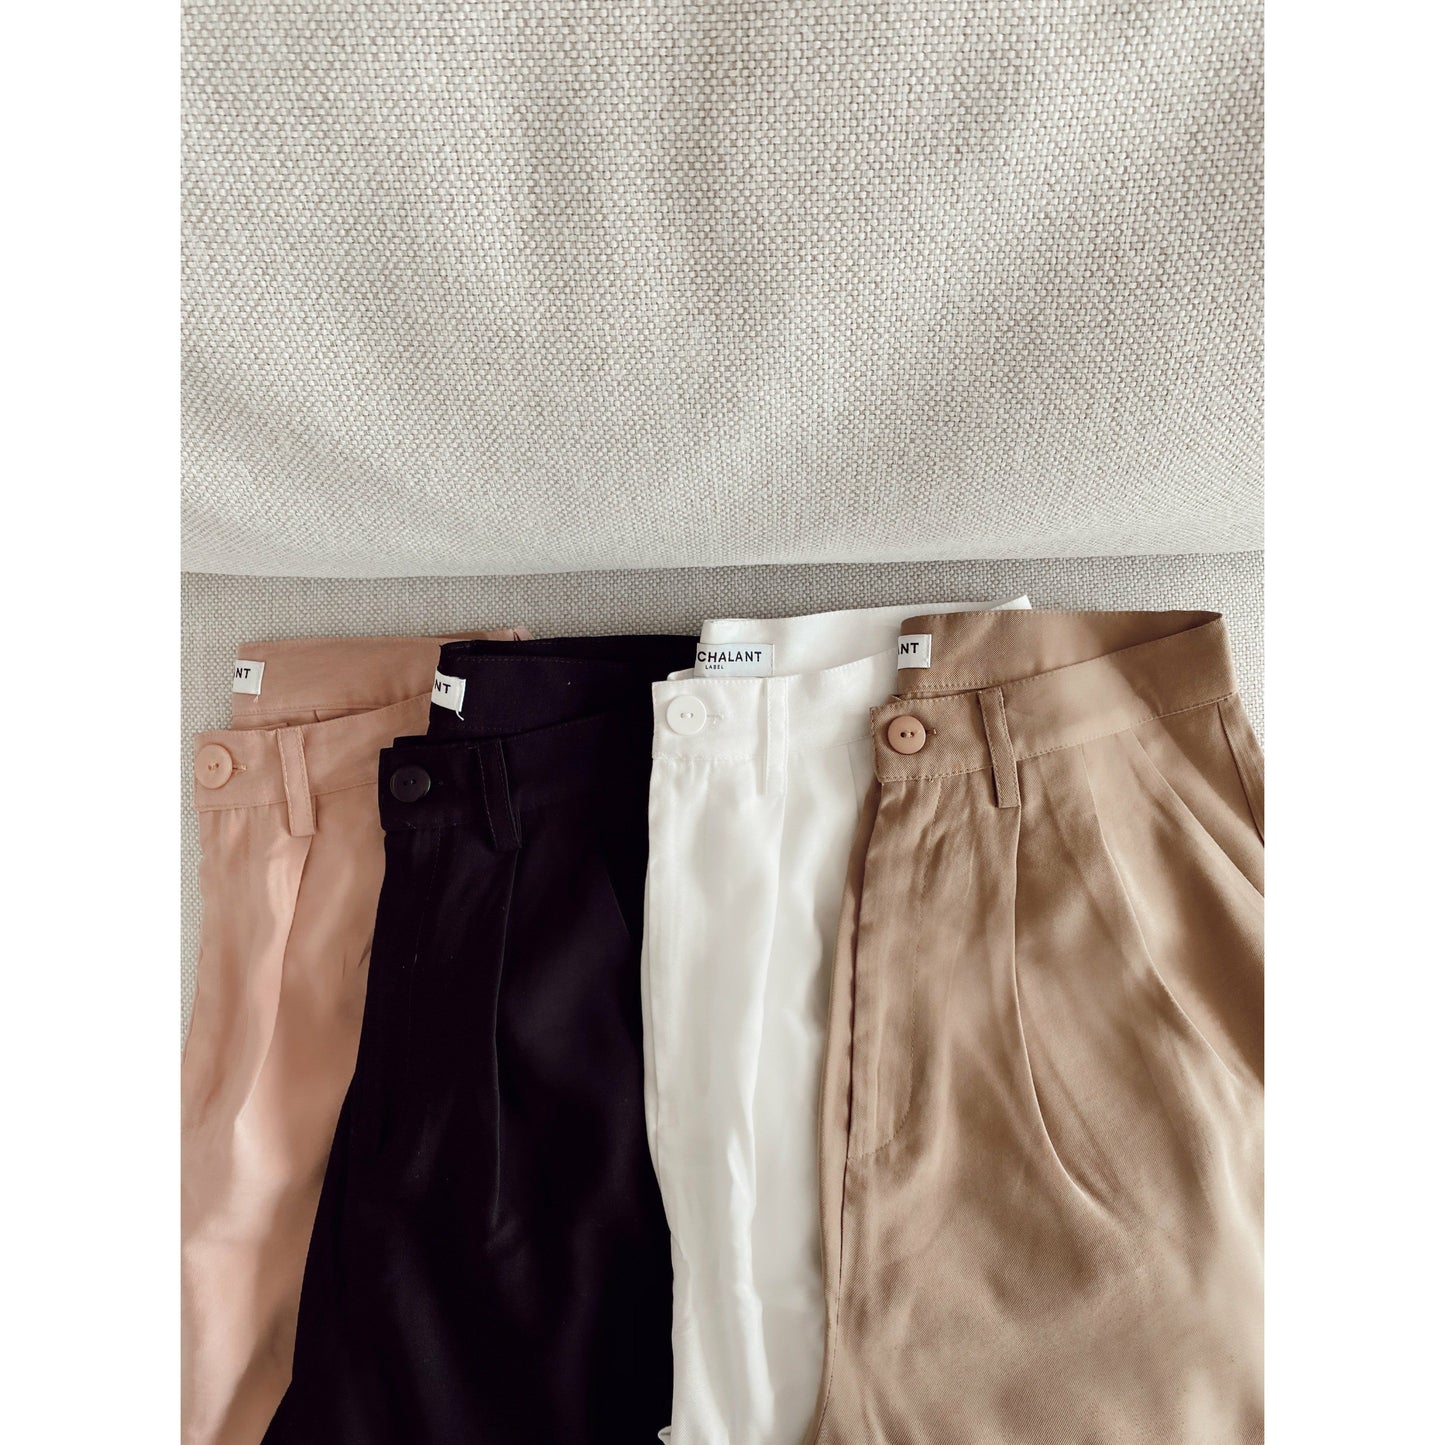 Fabi Pants | Women’s Clothing Boutique